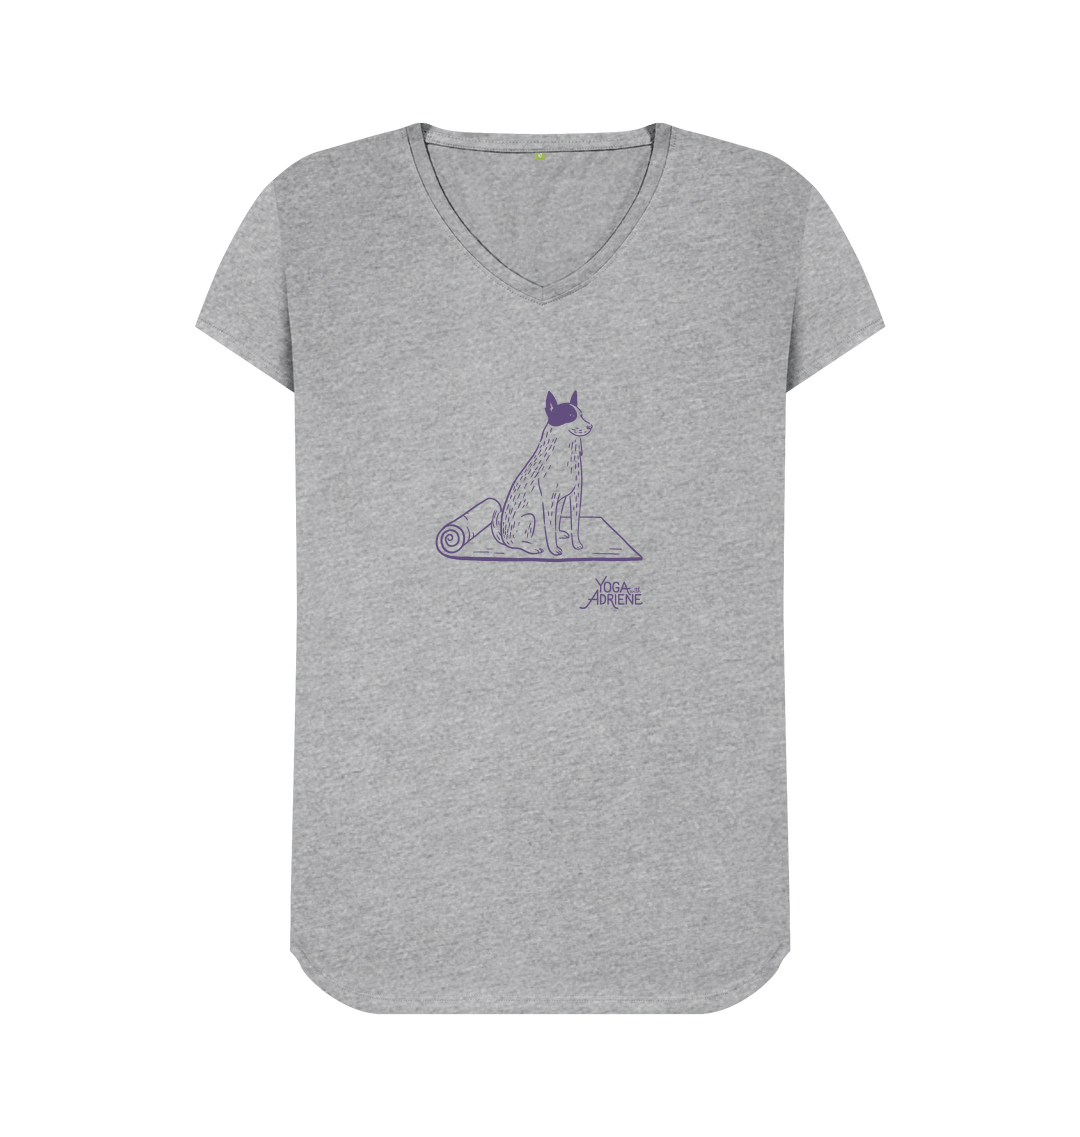  Yoga Bae - Funny Yoga T-shirt for your Bae : Clothing